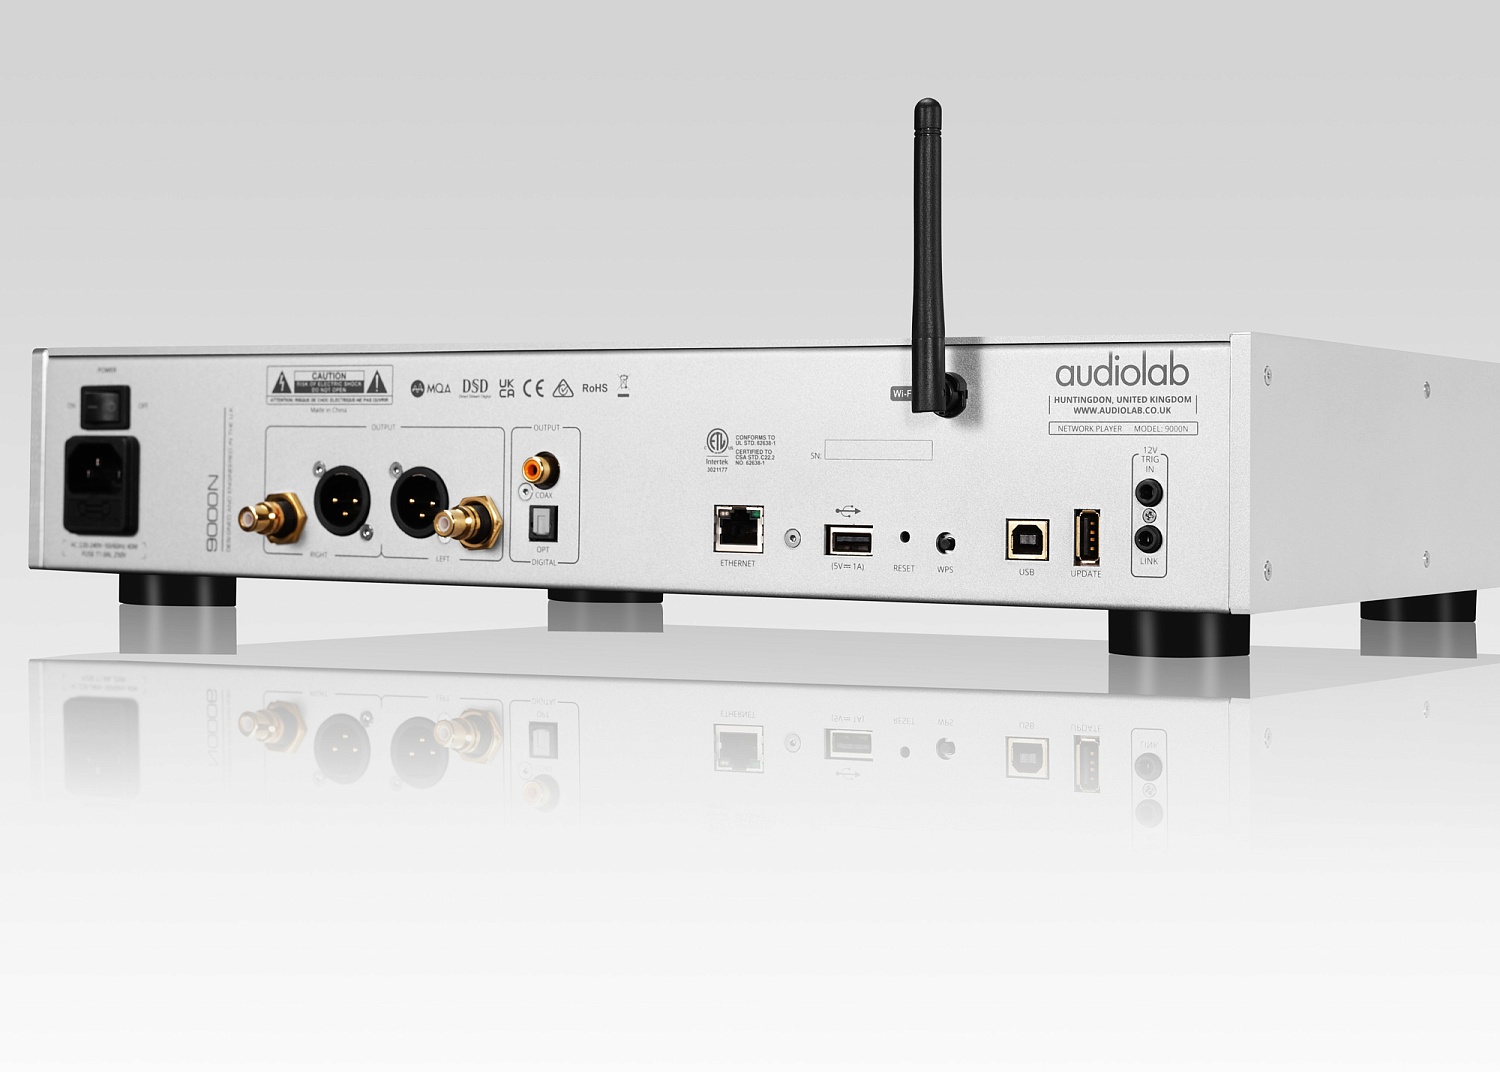 Audiolab 9000N